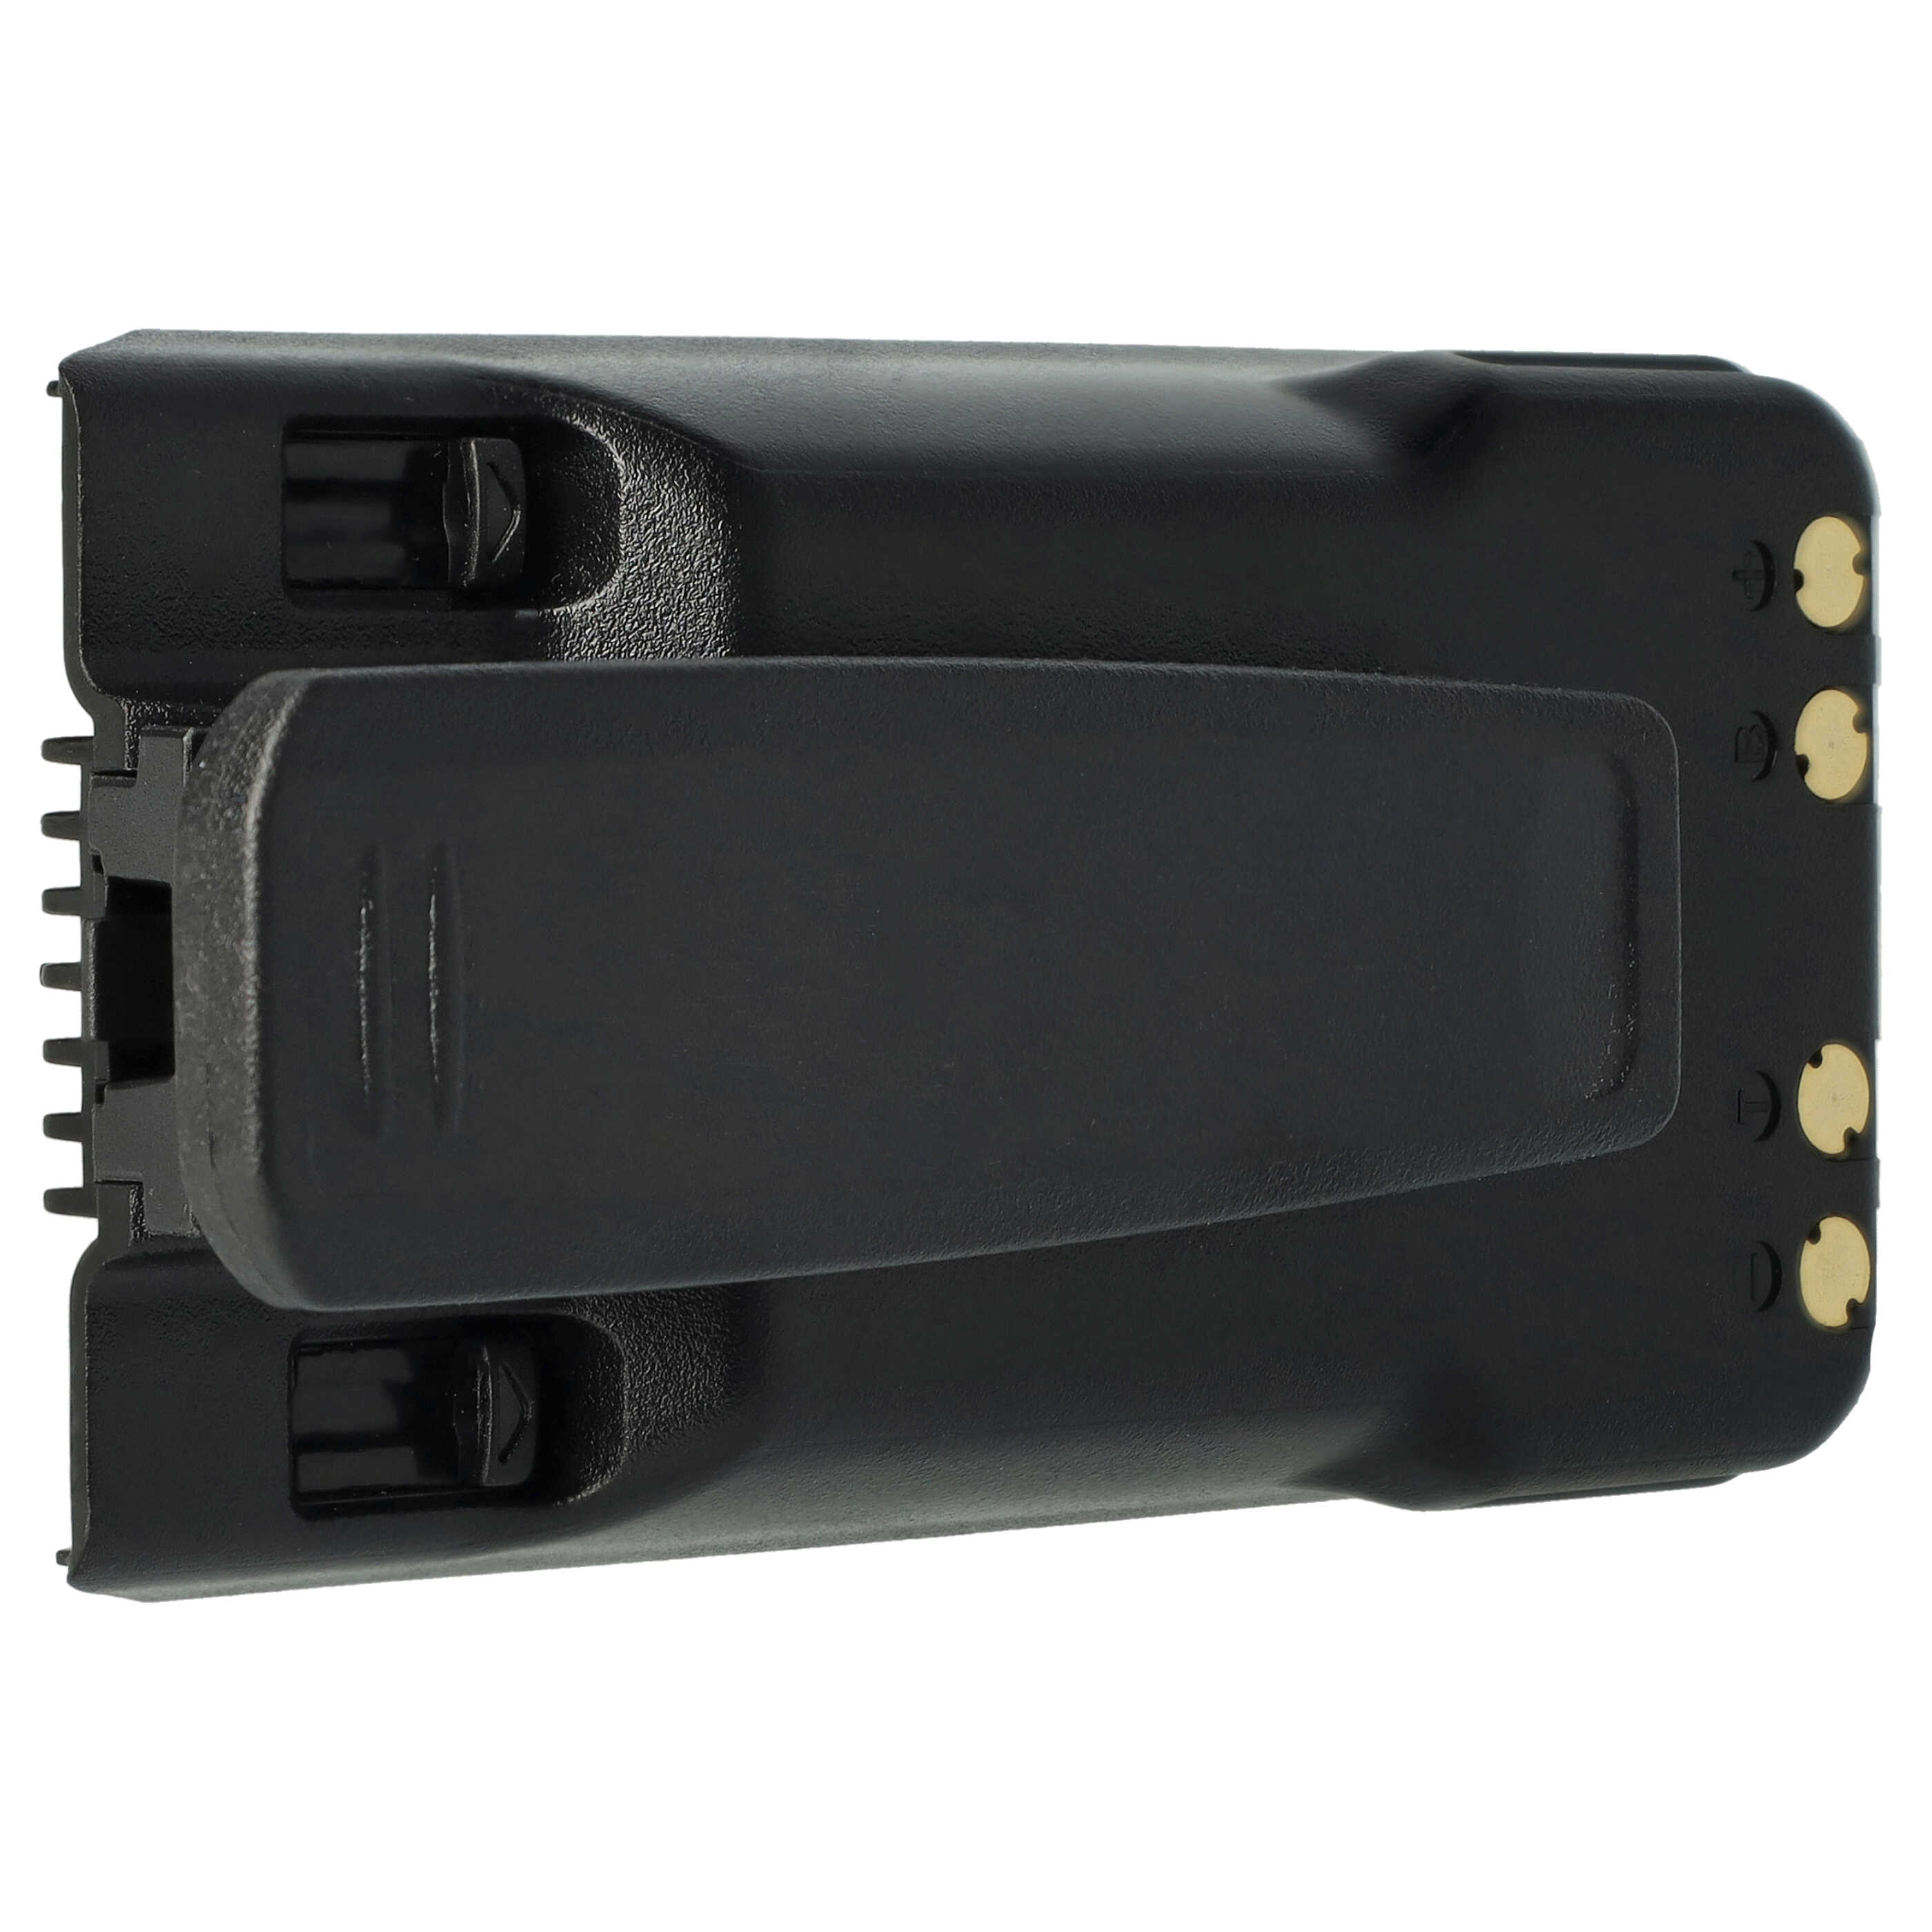 Batteria per dispositivo radio sostituisce Icom BP-280LI Icom - 2250mAh 7,4V Li-Ion